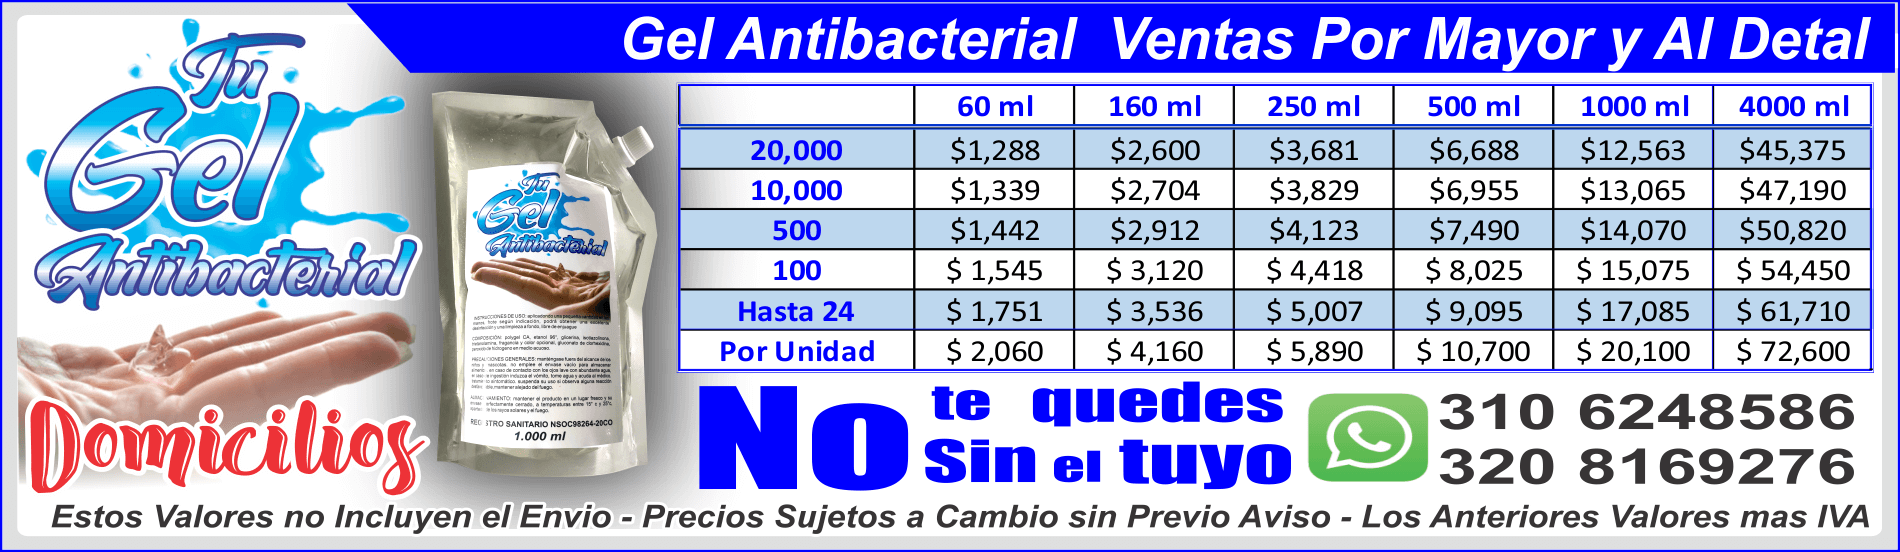 Gel Antibacteral con invima, colombia